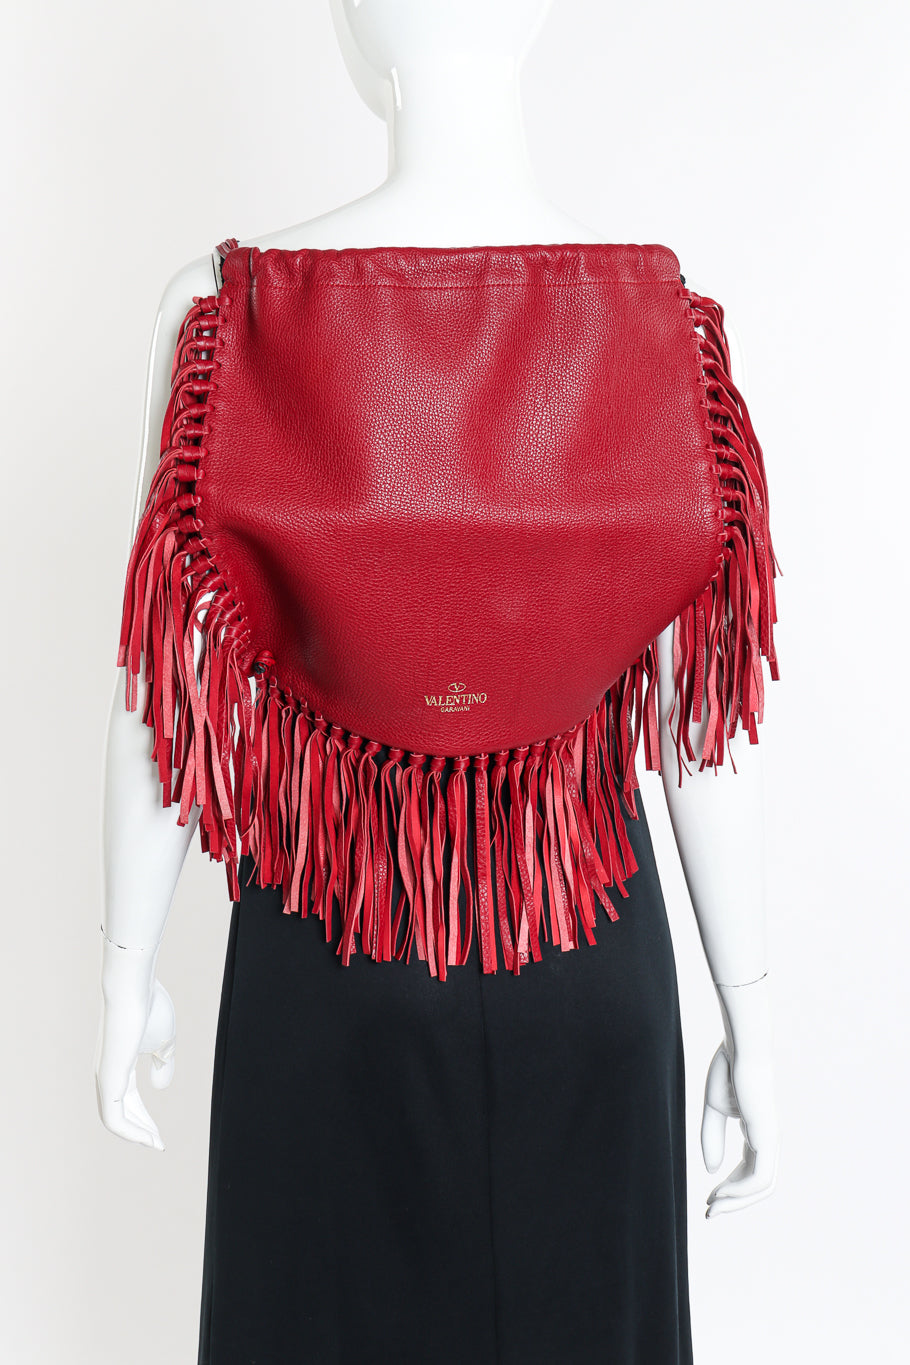 Garavani 'C-Rockee' Fringed Leather Backpack by Valentino on mannequin @recessla